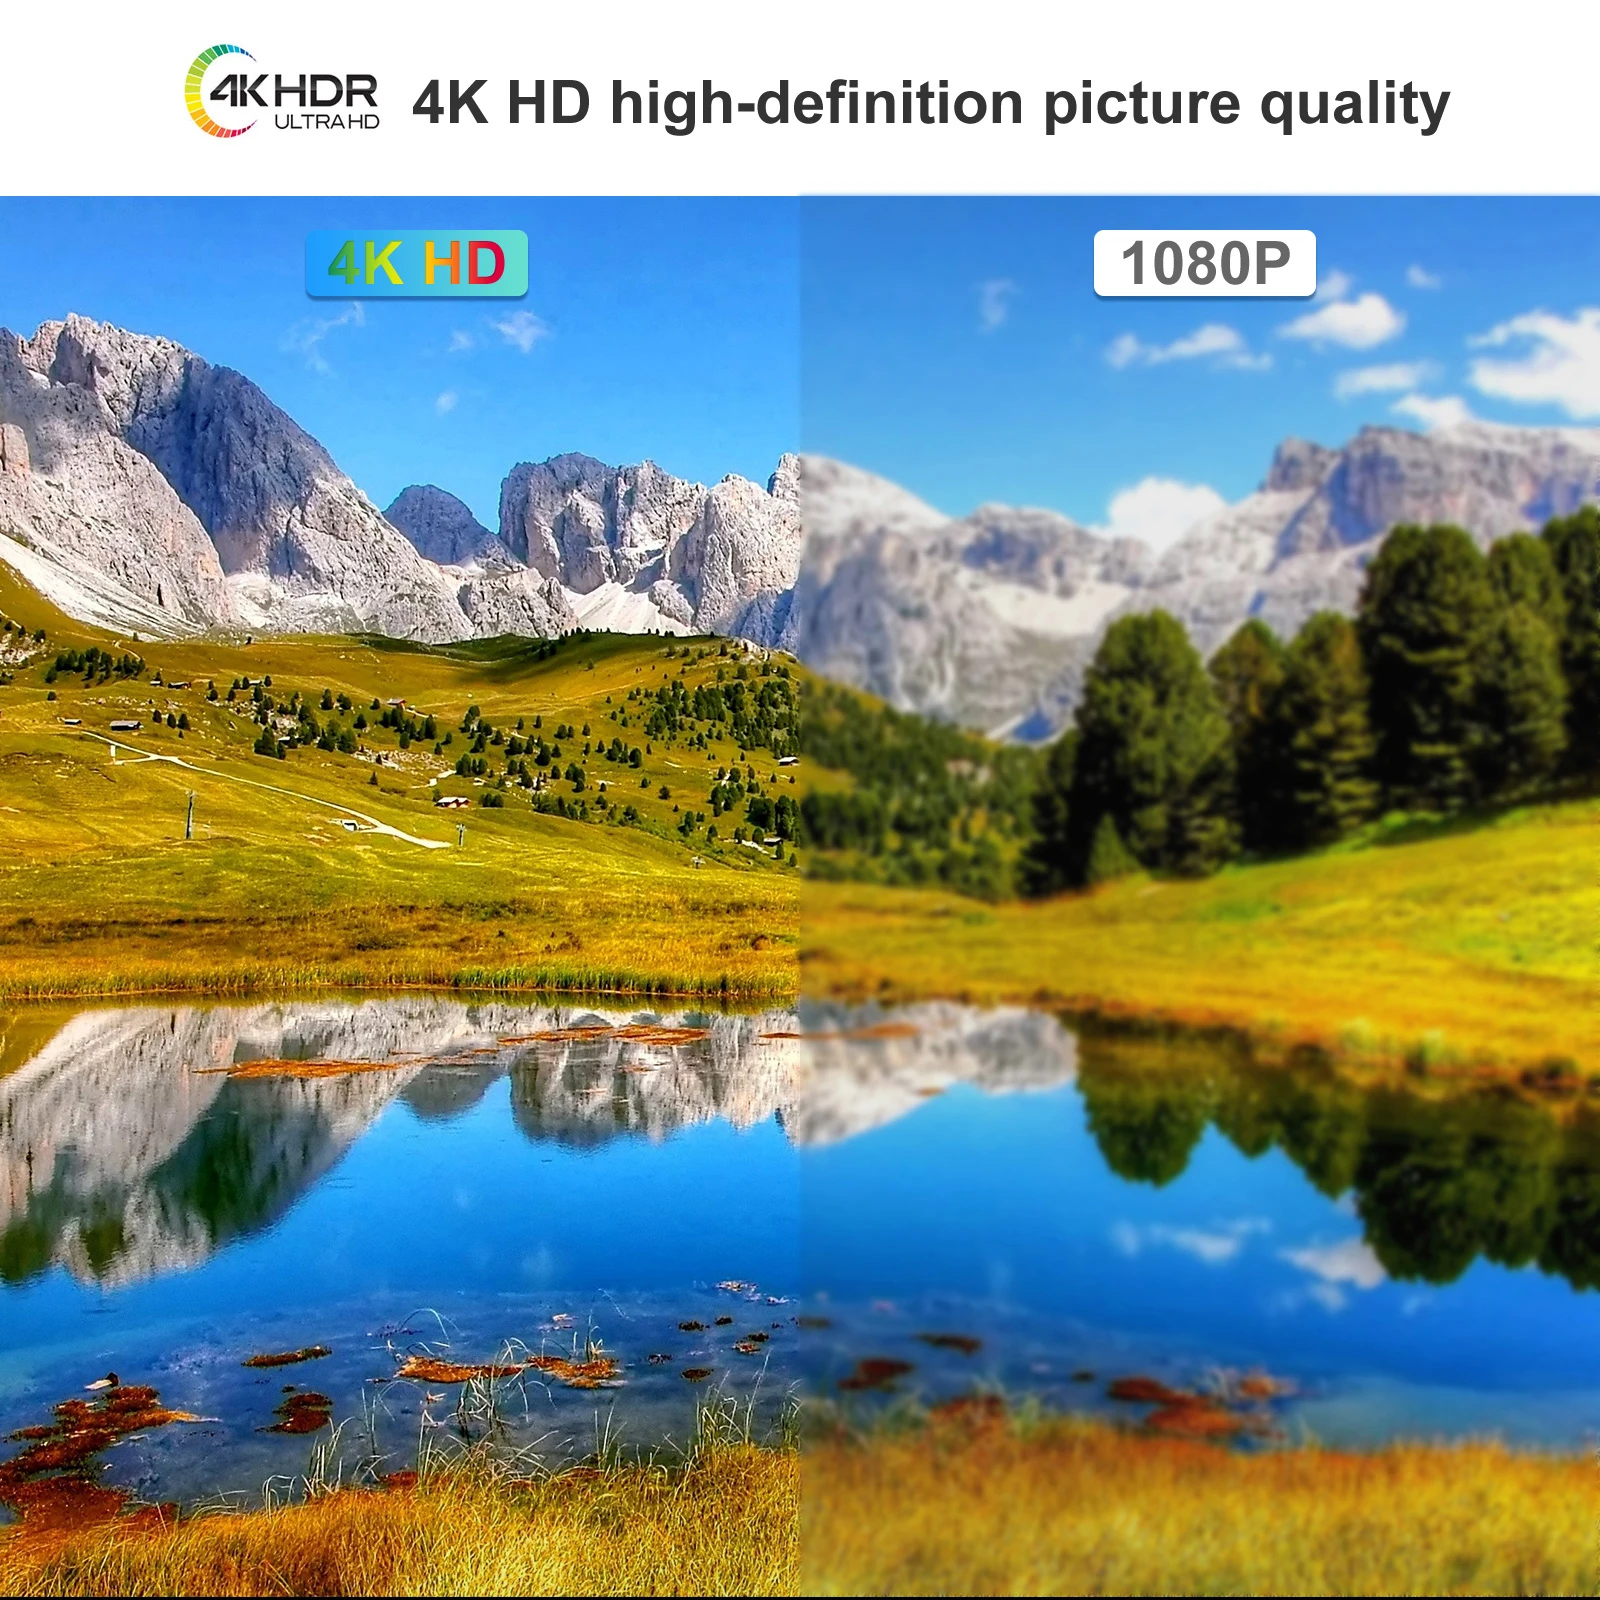 Lemfo HAKO Pro Smart TV Box Android 11 Google Certified Amlogic S905Y4 2,4 G 5G Wifi BT5.0 4K HDR TV Box и IPTV 2023